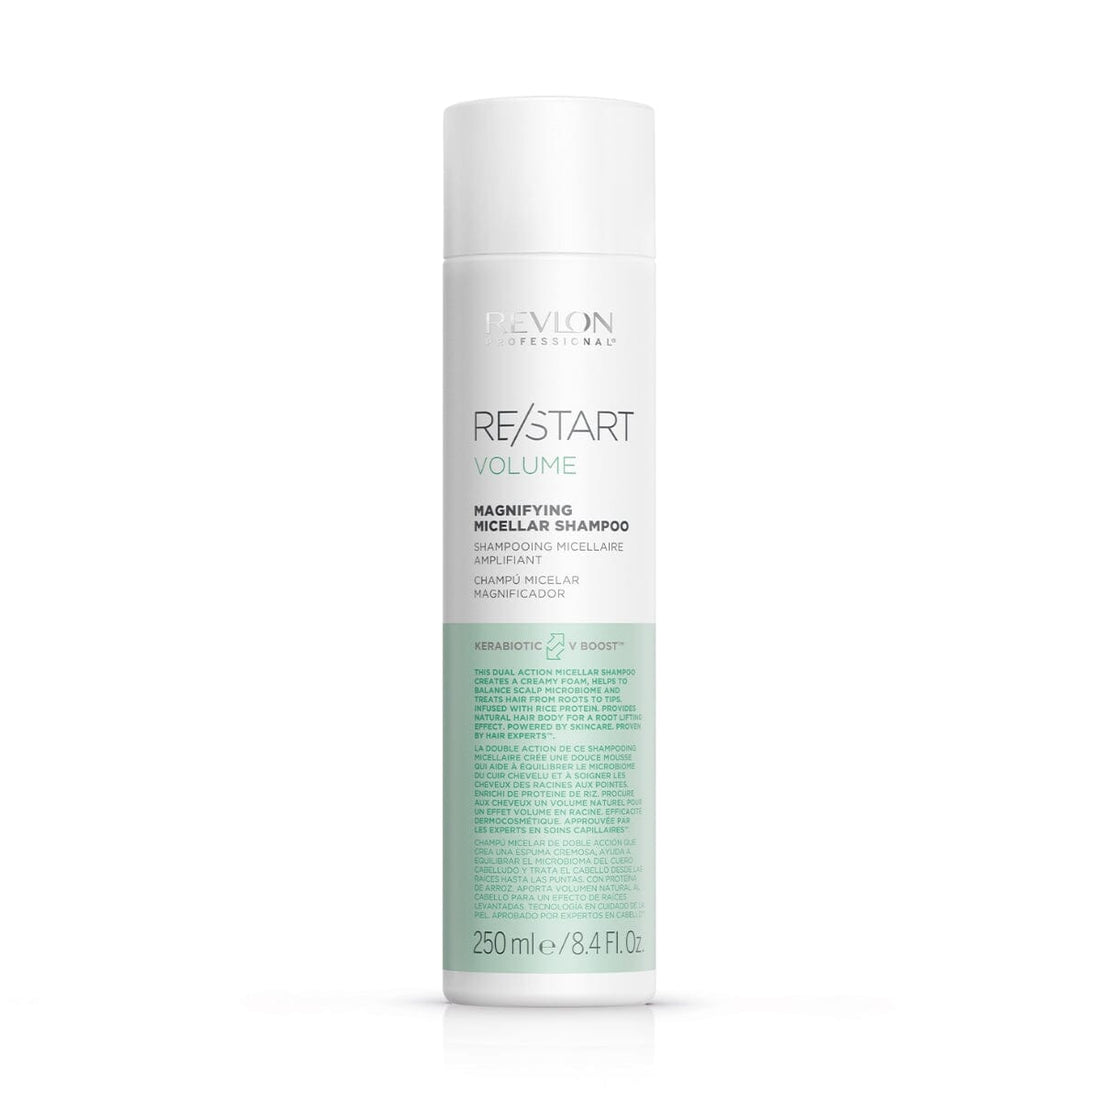 Revlon Professional ReStart Volume Magnifying Micellar Shampoo 250ml - HairMNL